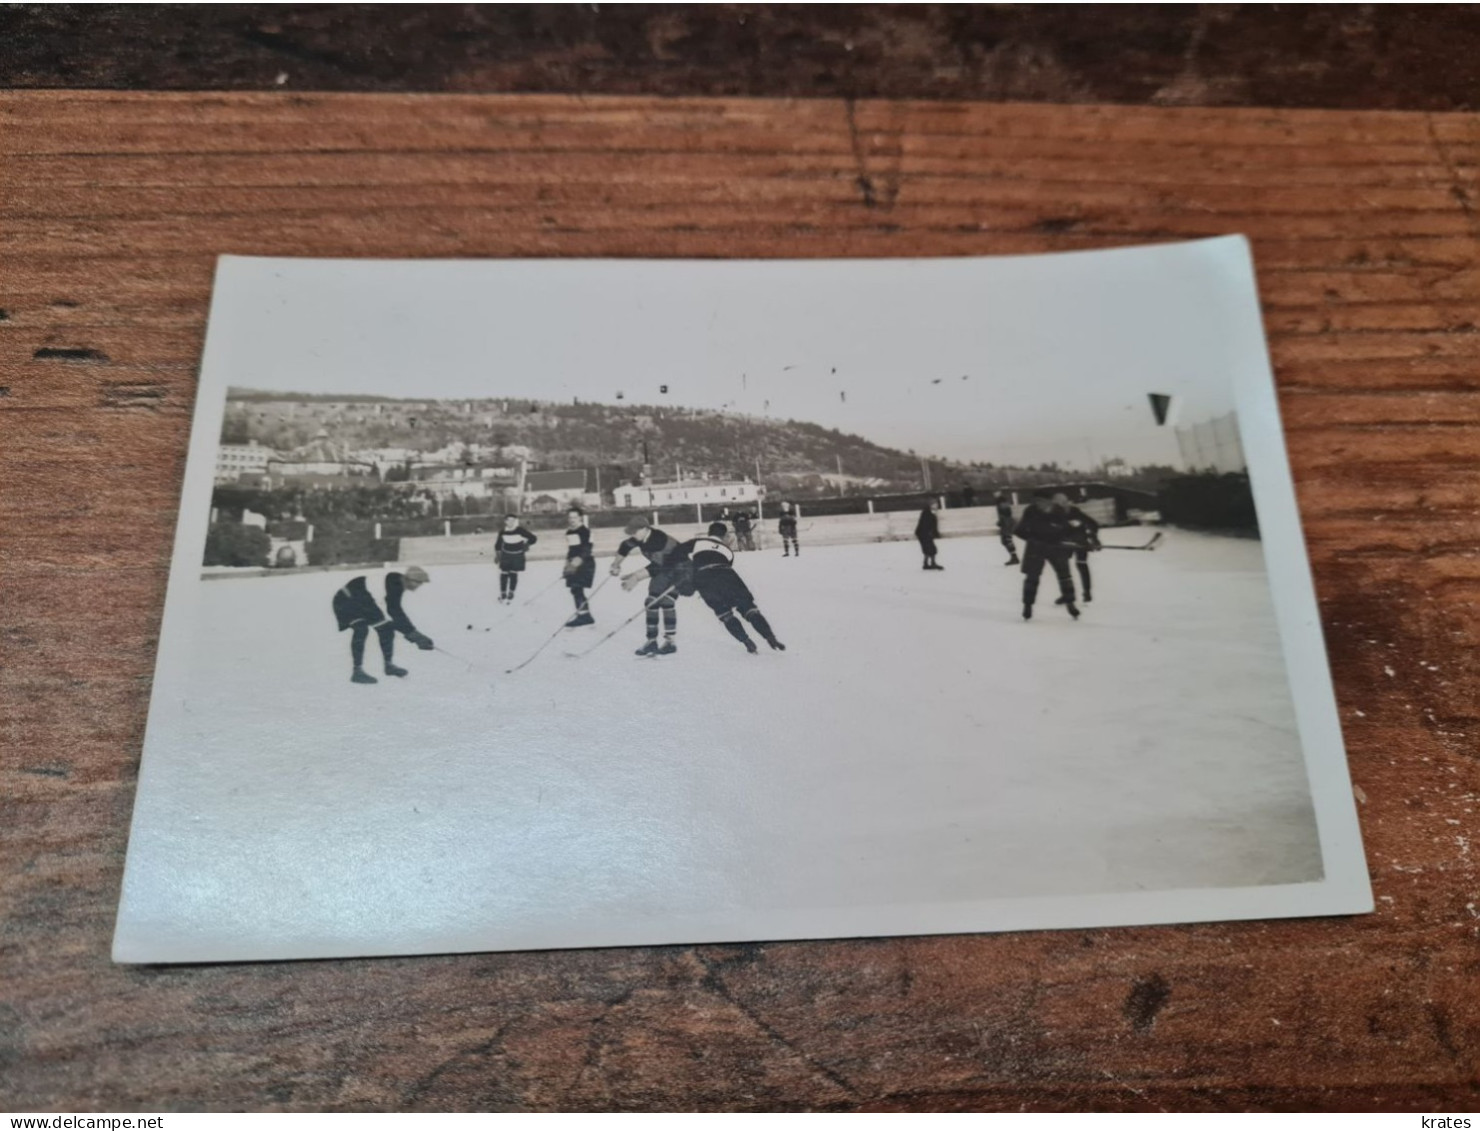 Postcard - Hockey   (32976) - Sports D'hiver